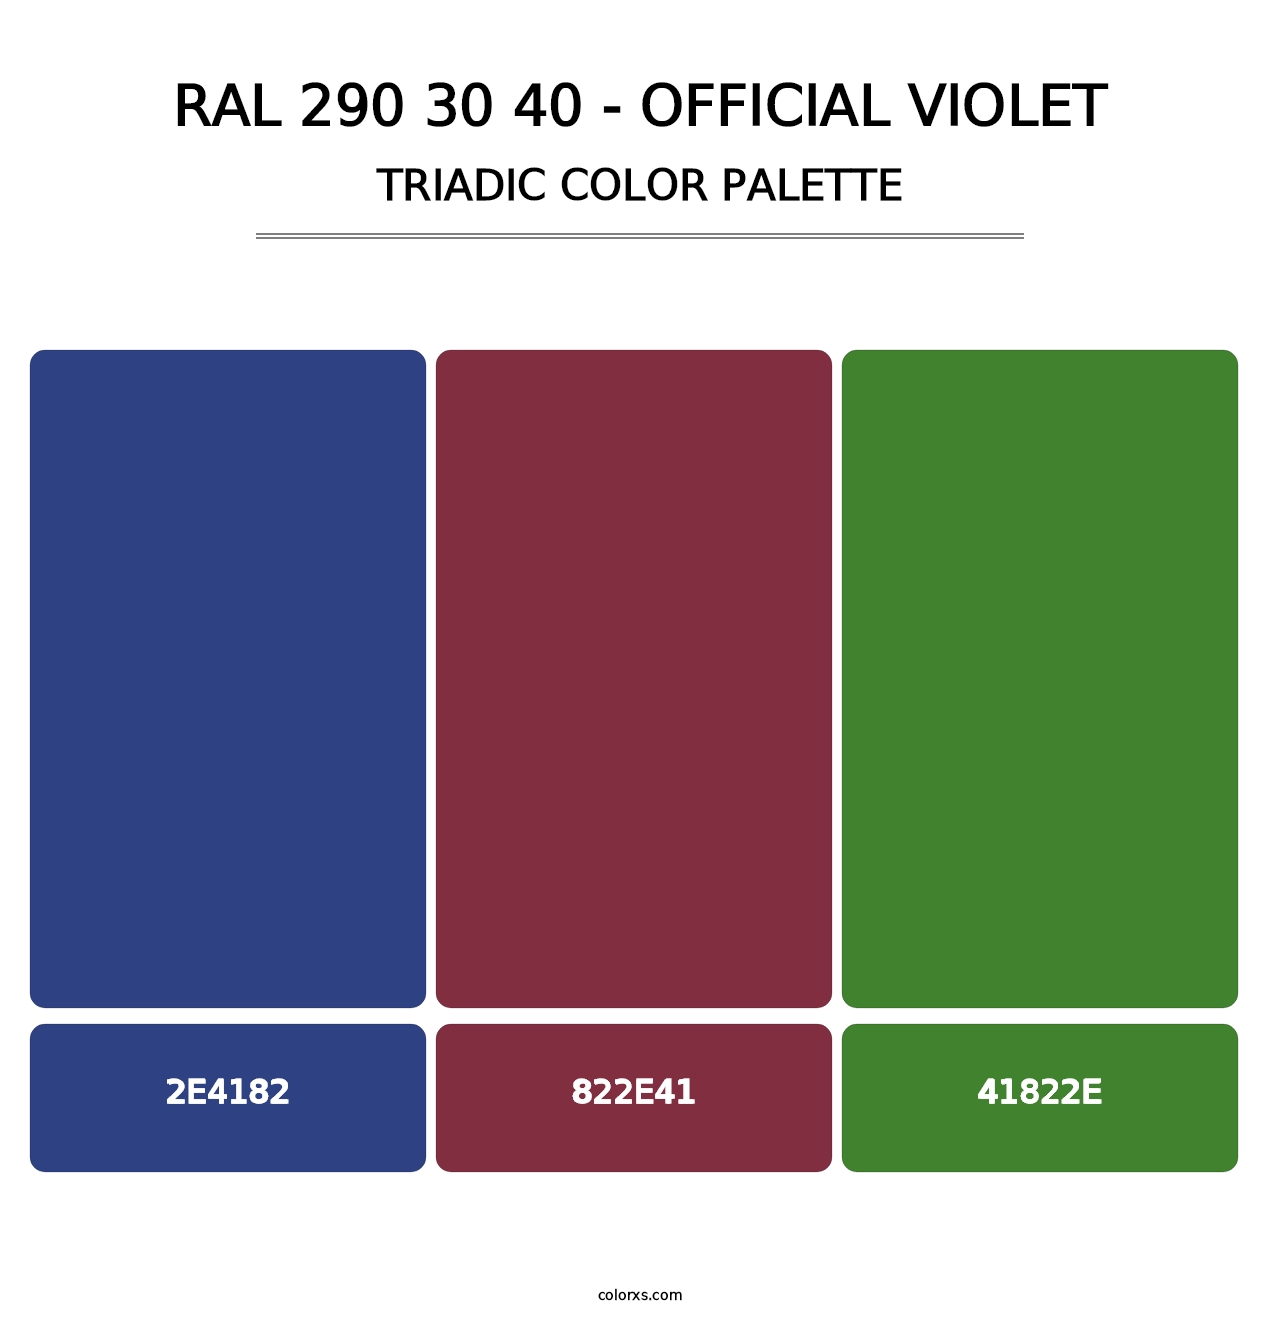 RAL 290 30 40 - Official Violet - Triadic Color Palette